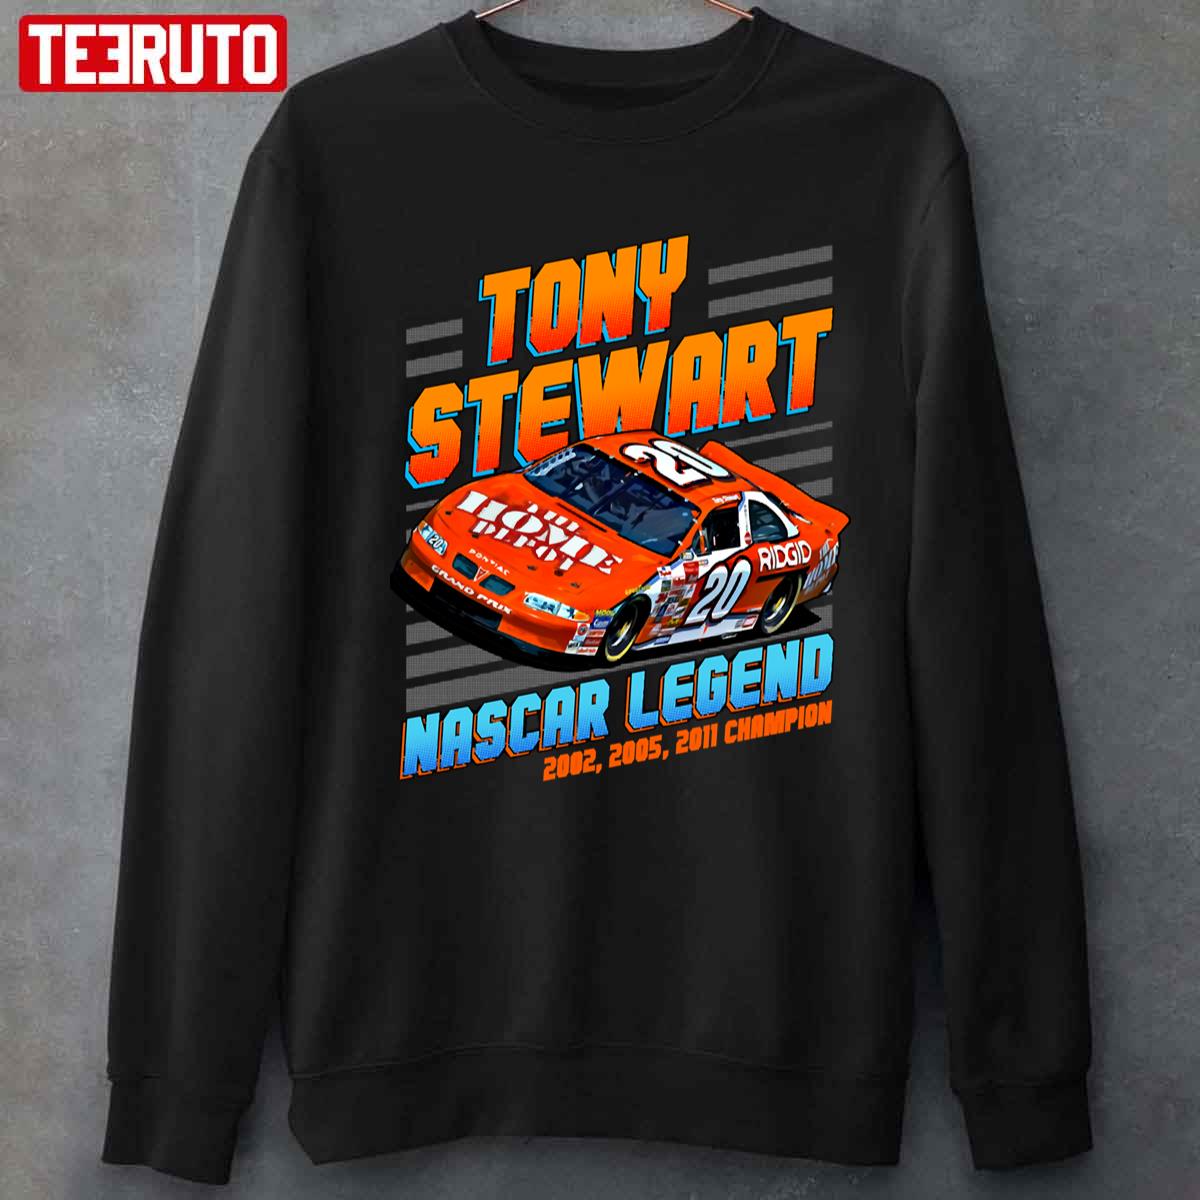 Tony Stewart Nascar Champion 2002 2005 2011 Unisex T-Shirt